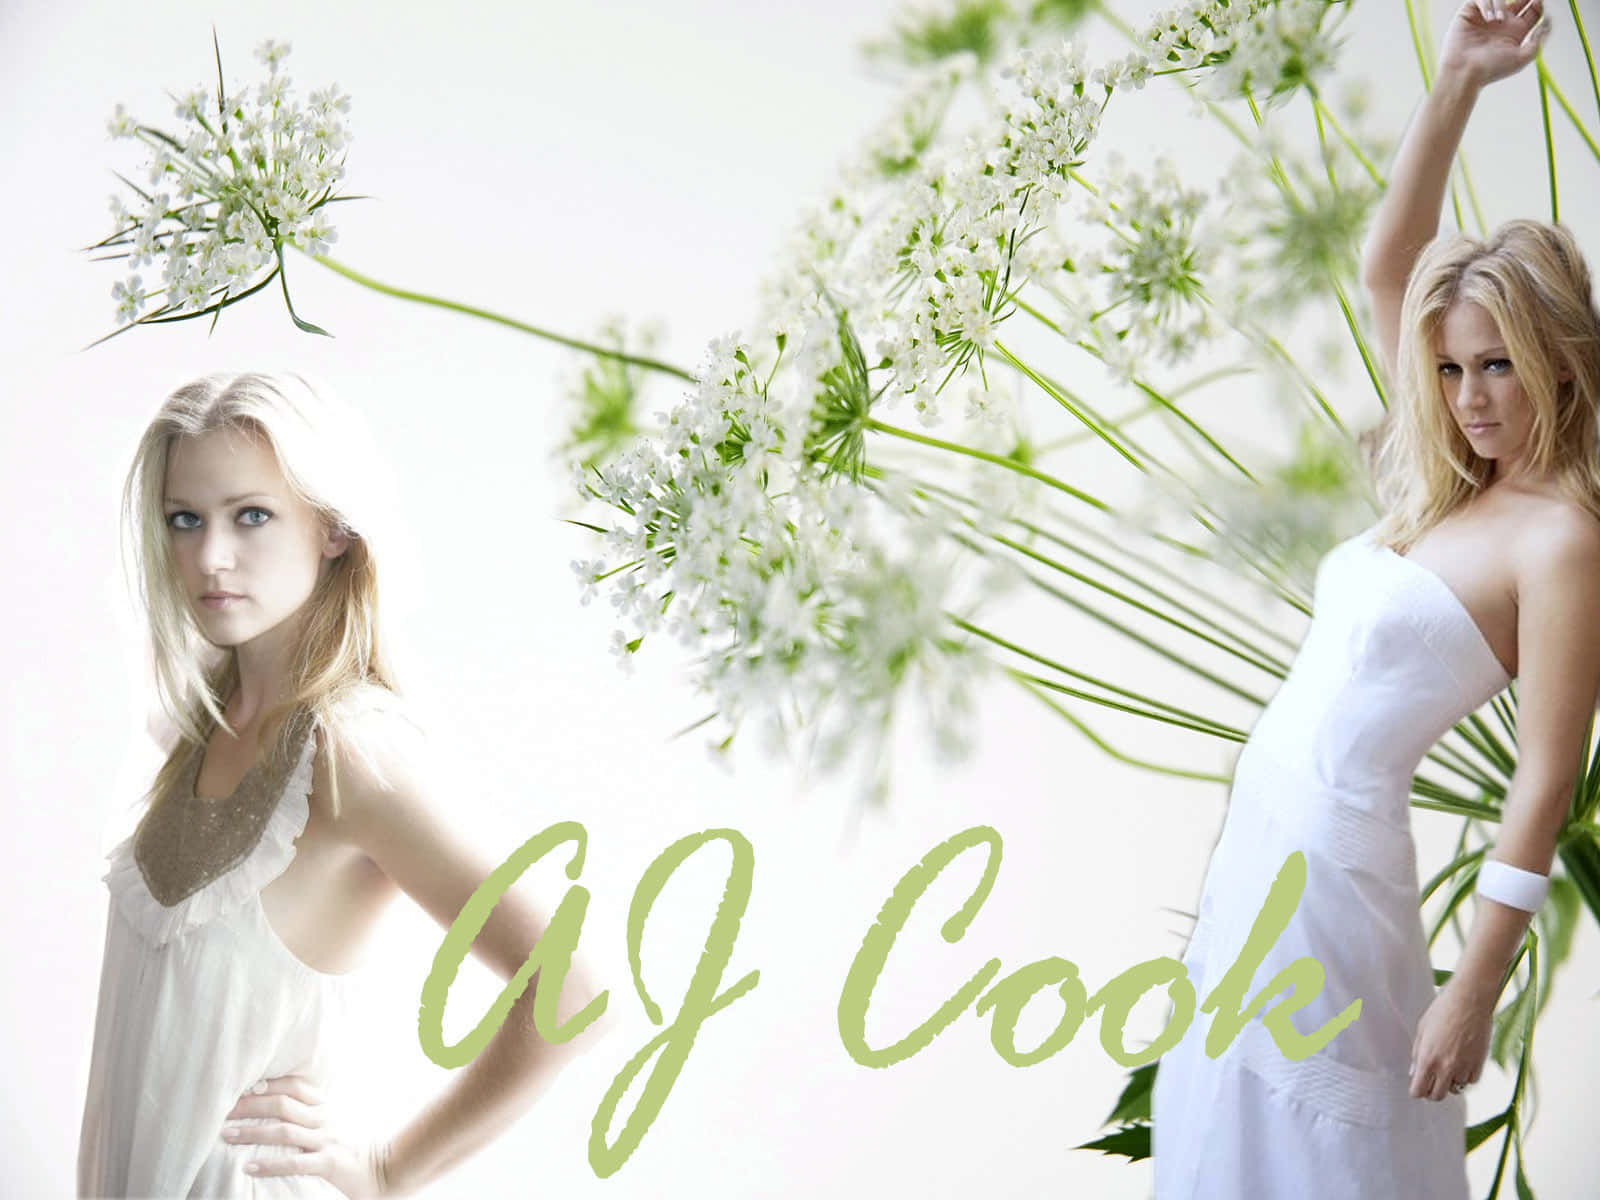 Stunning AJ Cook in an elegant photoshoot Wallpaper